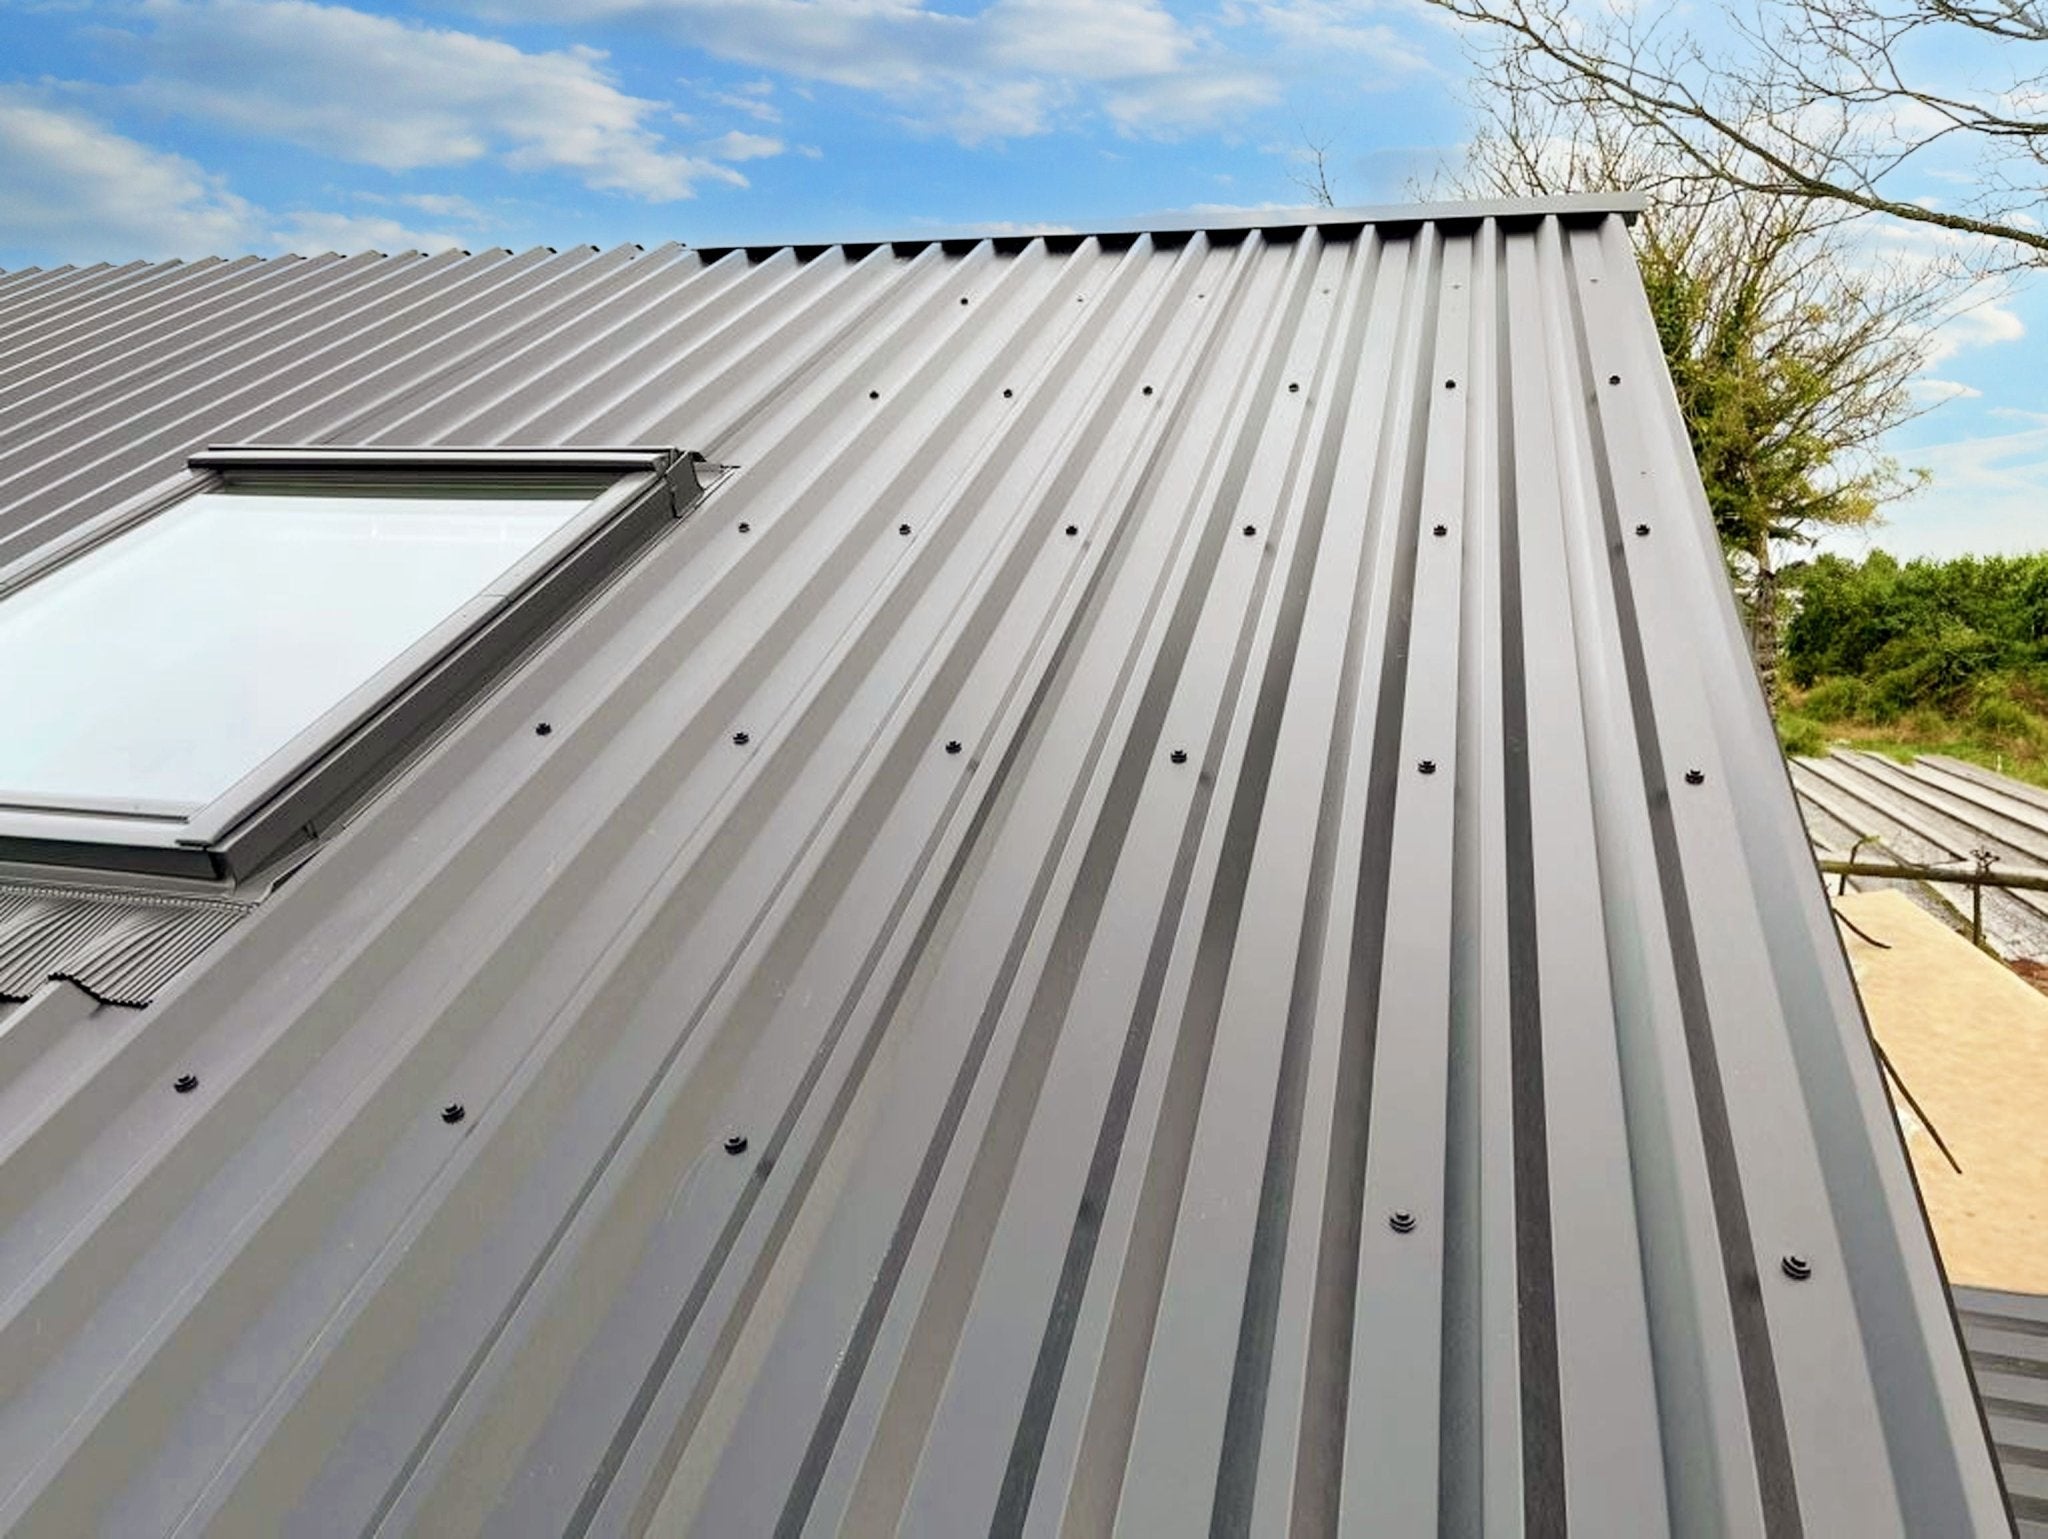 32/1000 Box Profile PVC Plastisol Coated 0.7mm Metal Roof Sheet Black - Trade Warehouse